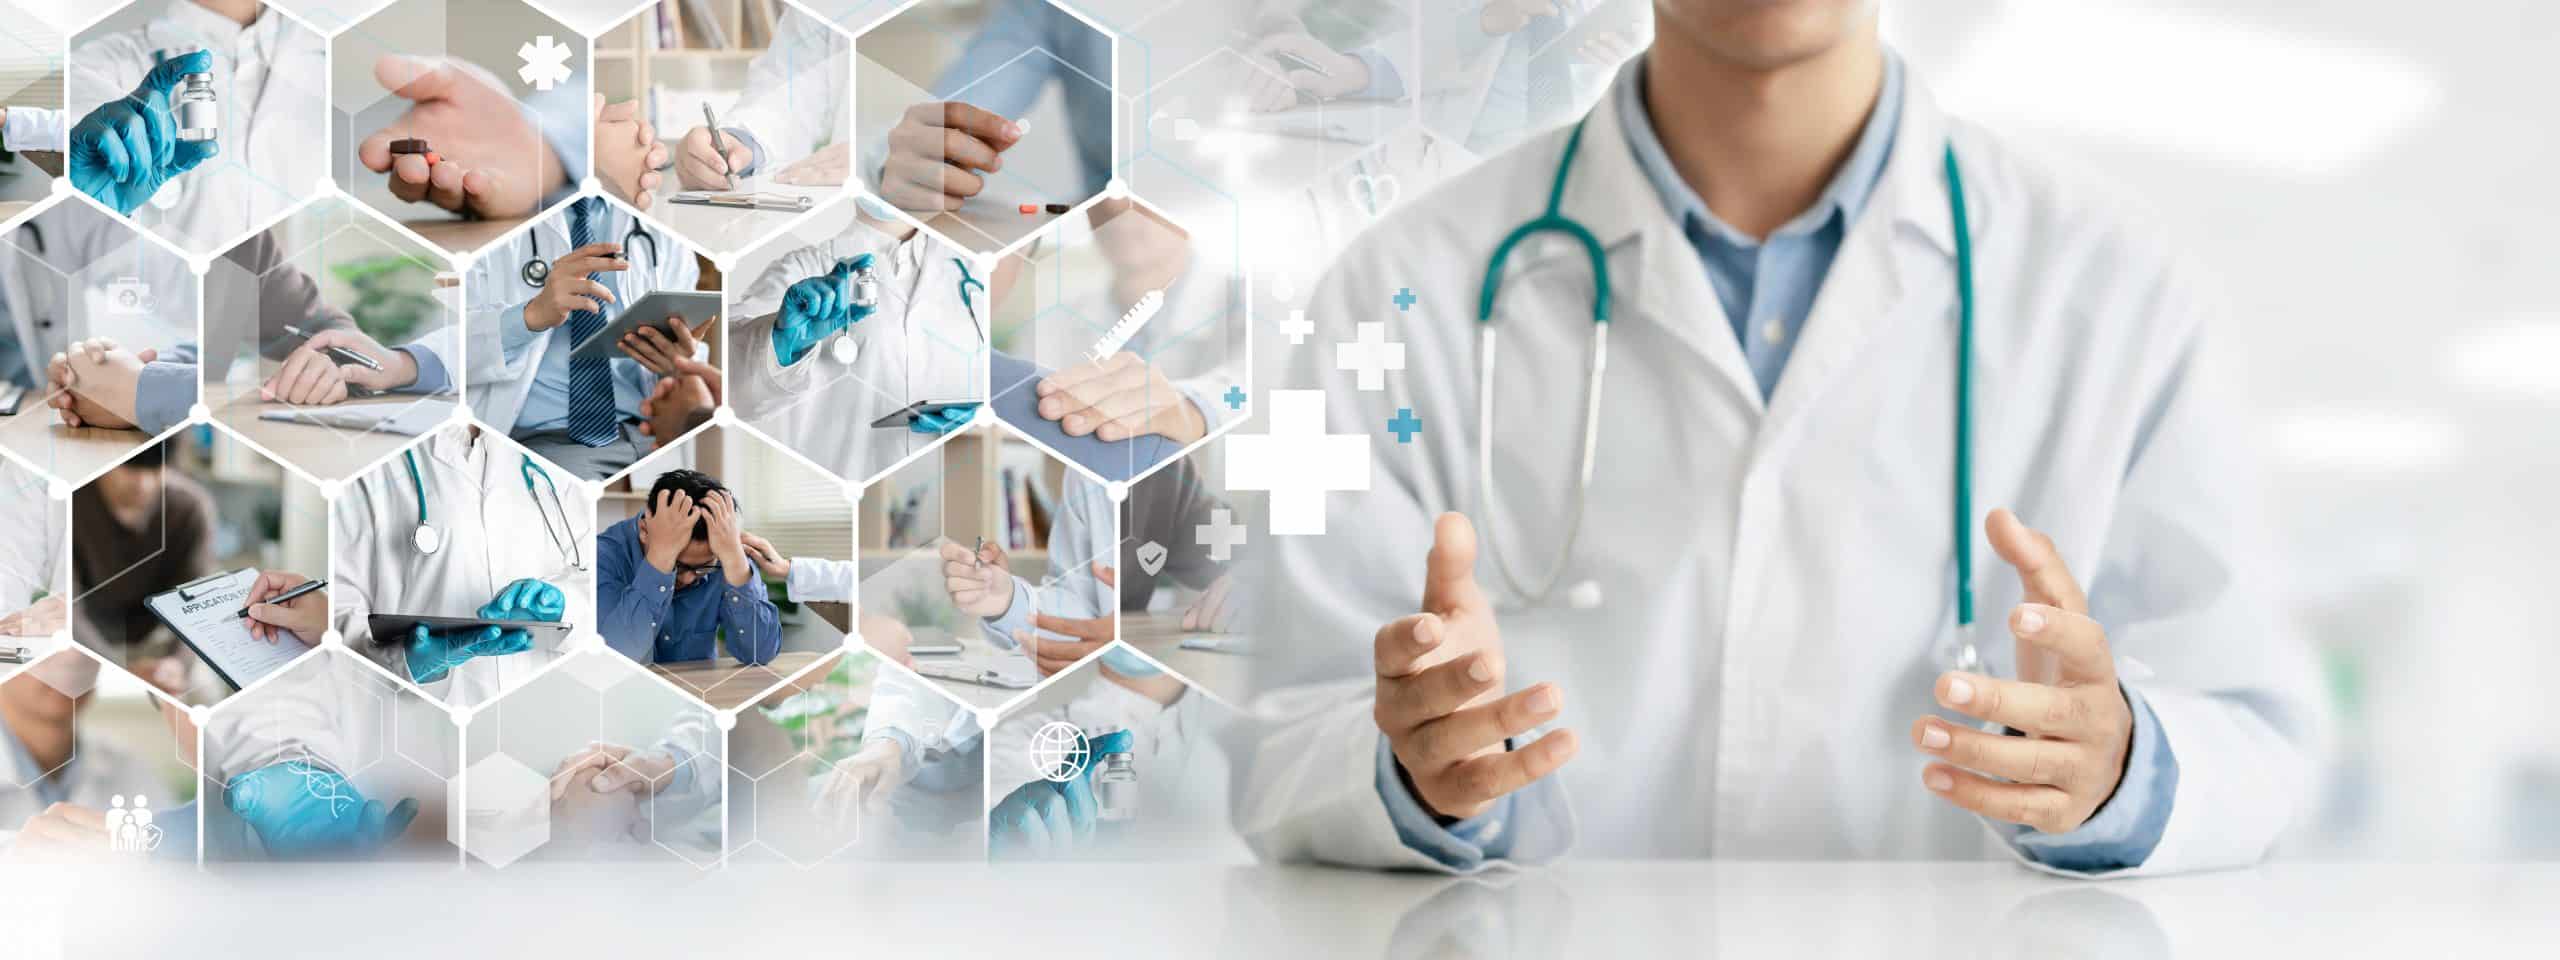 Methodologies Used in Healthcare Market Research